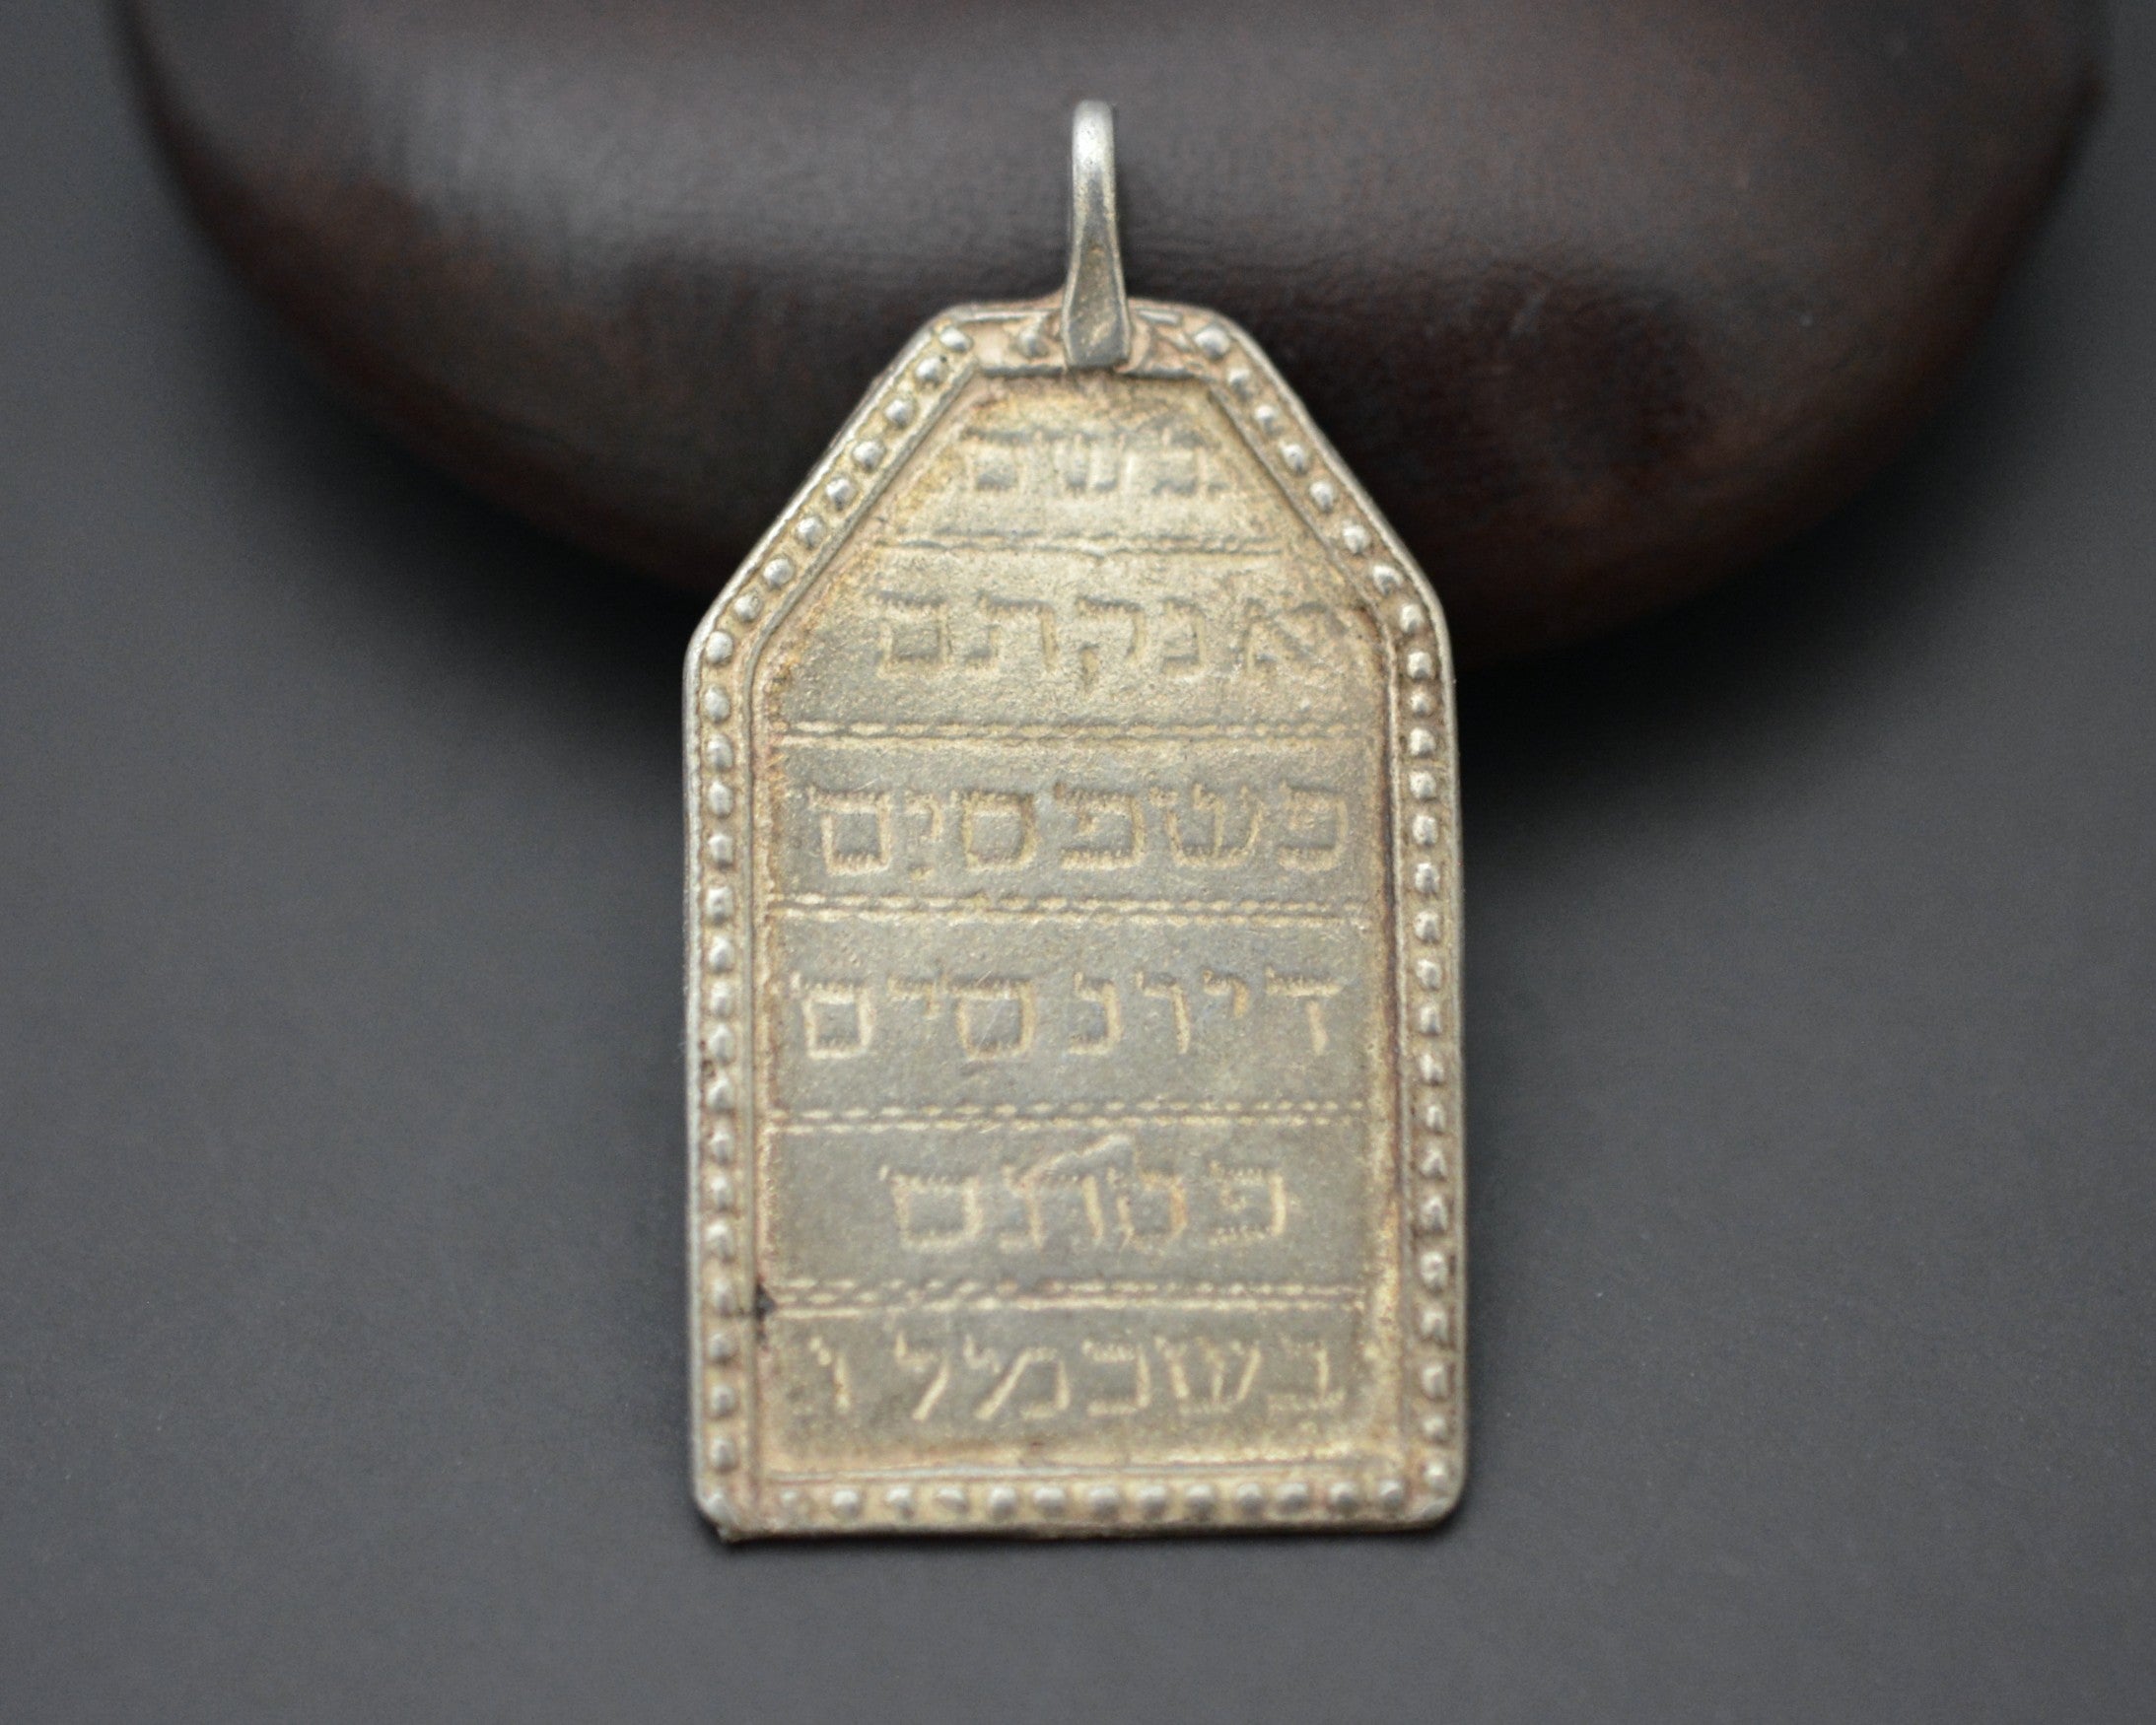 Ethnic Talisman Pendant with Hebrew Writing